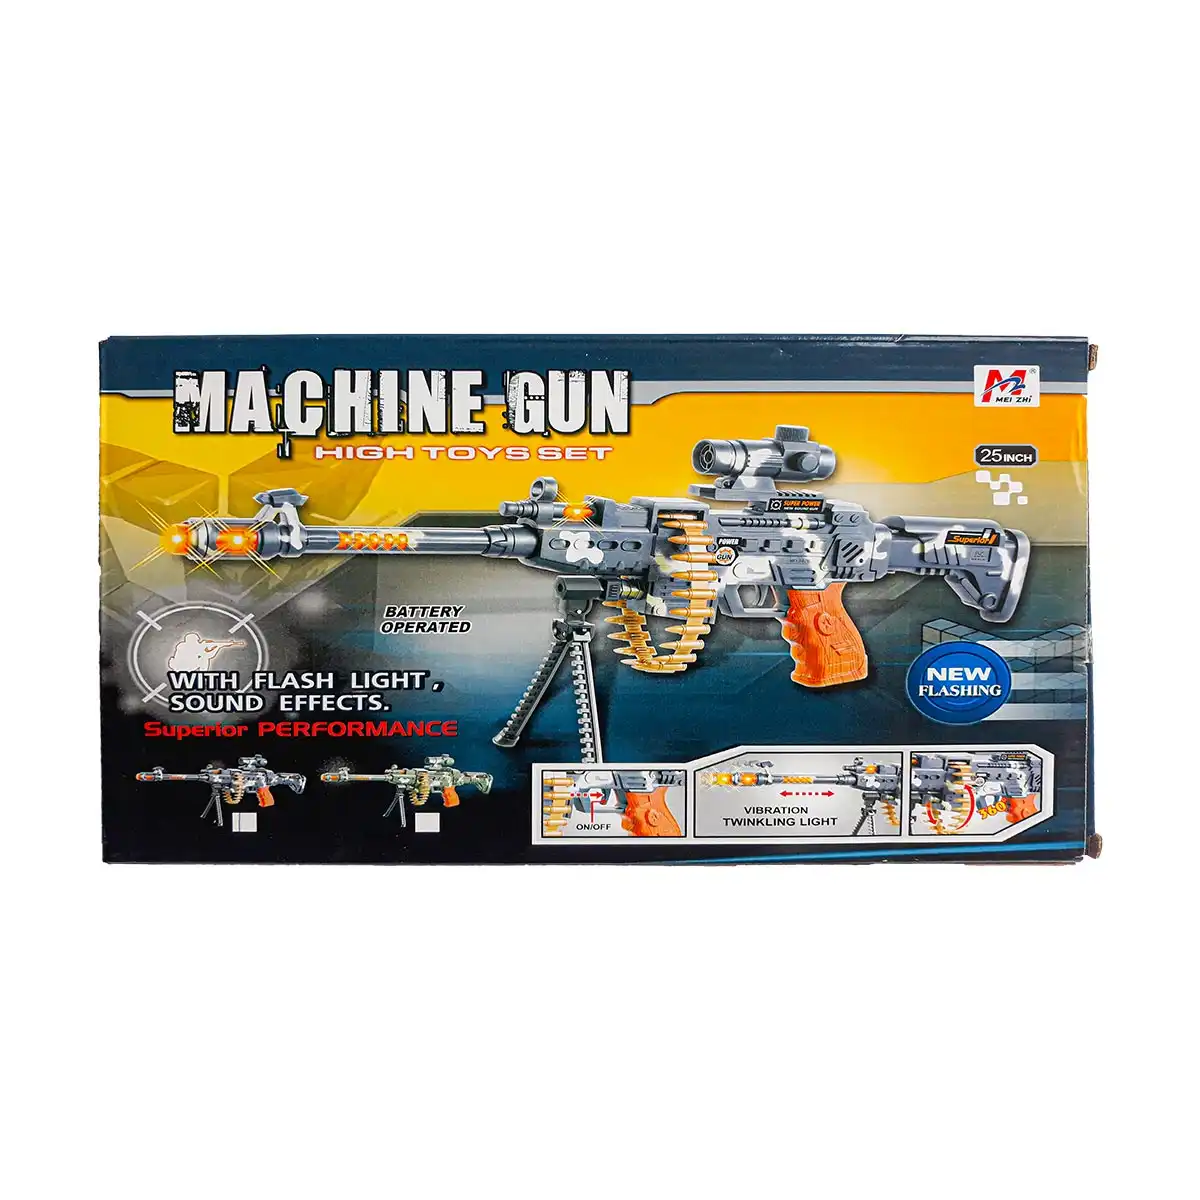 Toy machine gun fotografías e imágenes de alta resolución - Alamy